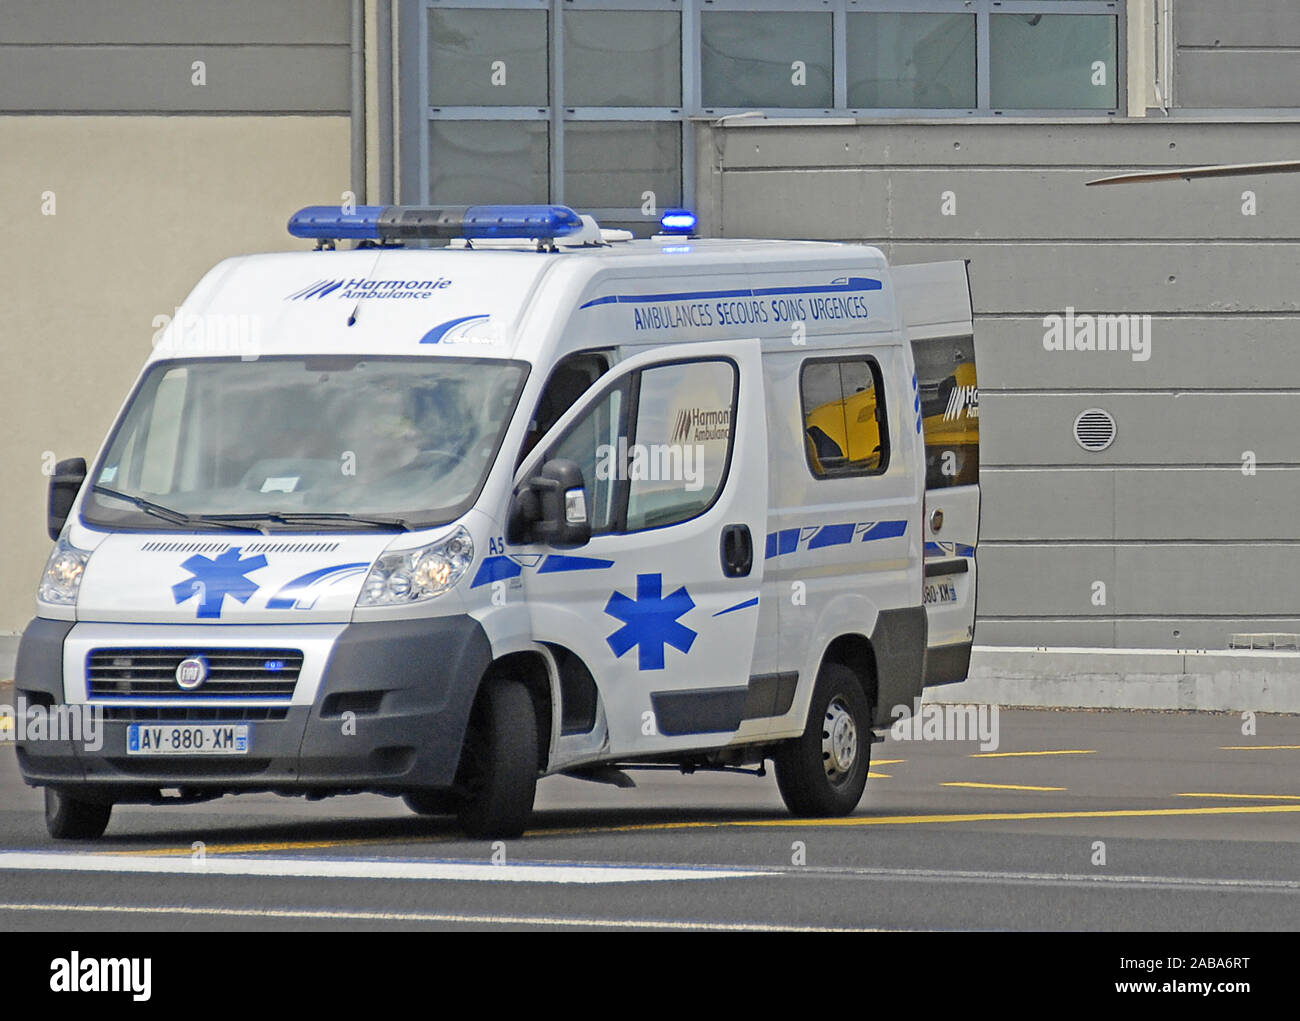 Ambulance before CHRU hospital,  Clermont-Ferrand, Auvergne, France Stock Photo